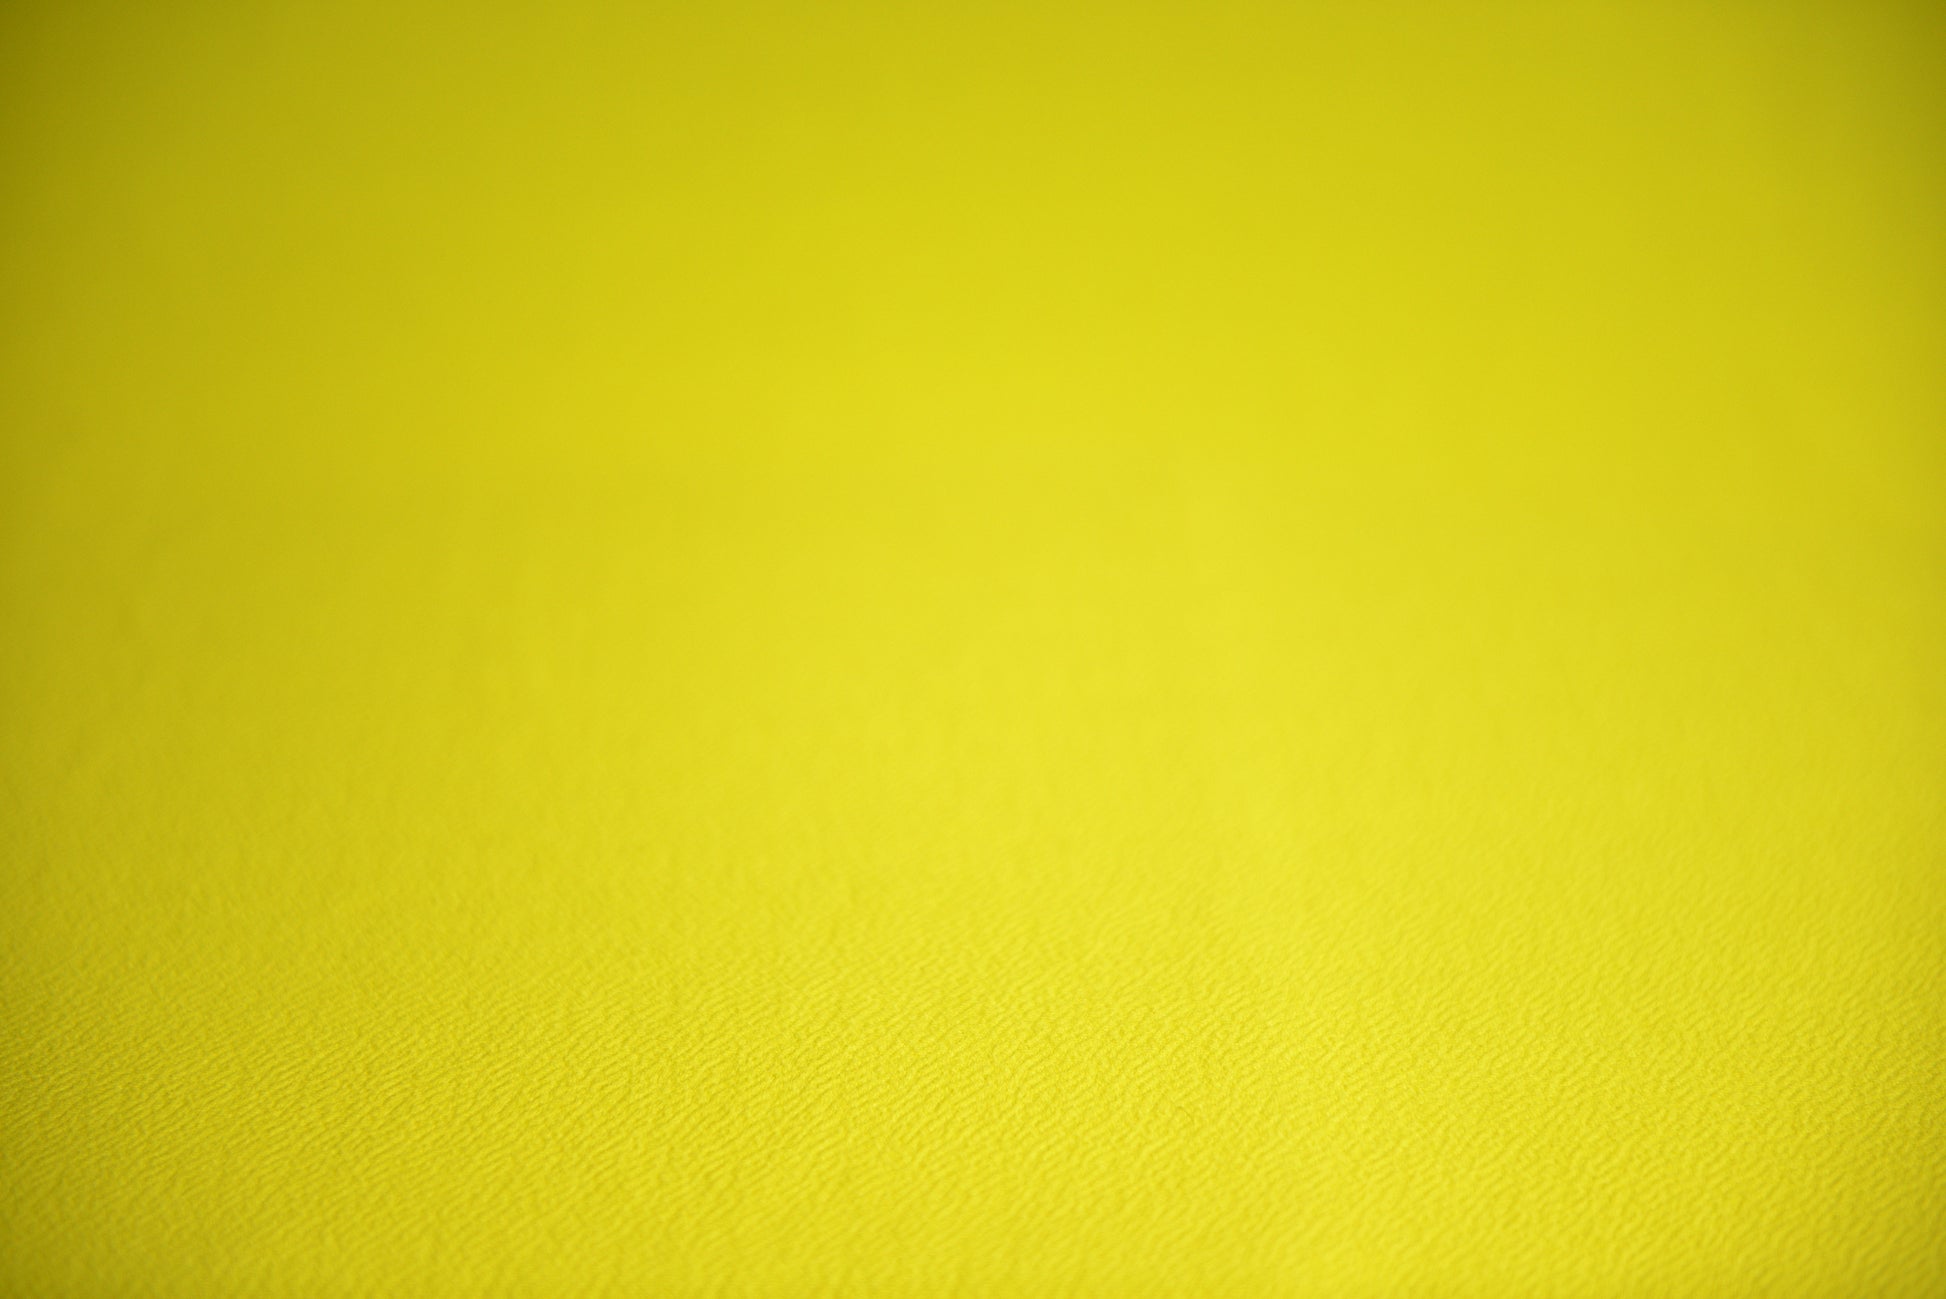 Bean Bag Fabric - Textured - Yellow-Newborn Photography Props